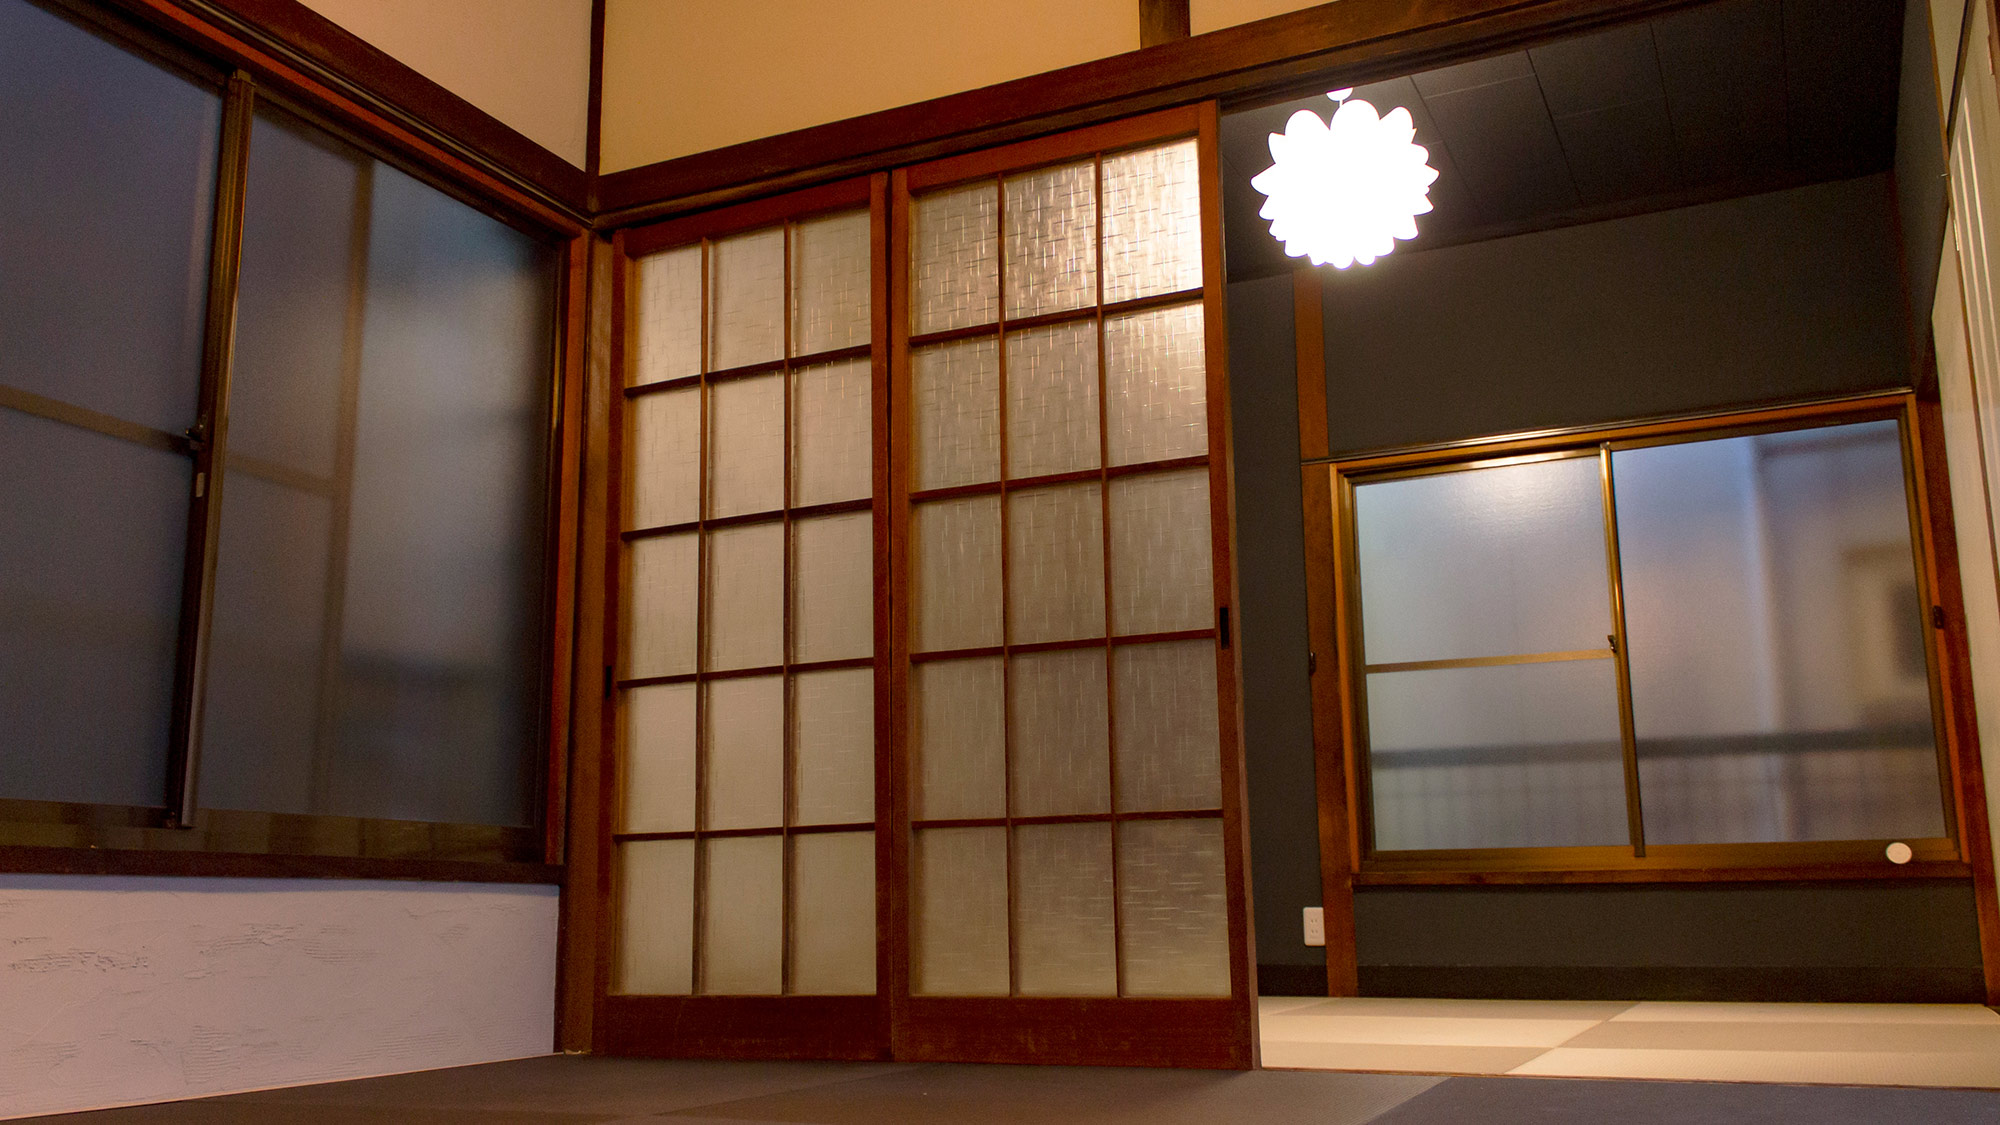 ・【TATAMIⅠ】日本の香りや居心地の良さを体感できる畳のお部屋